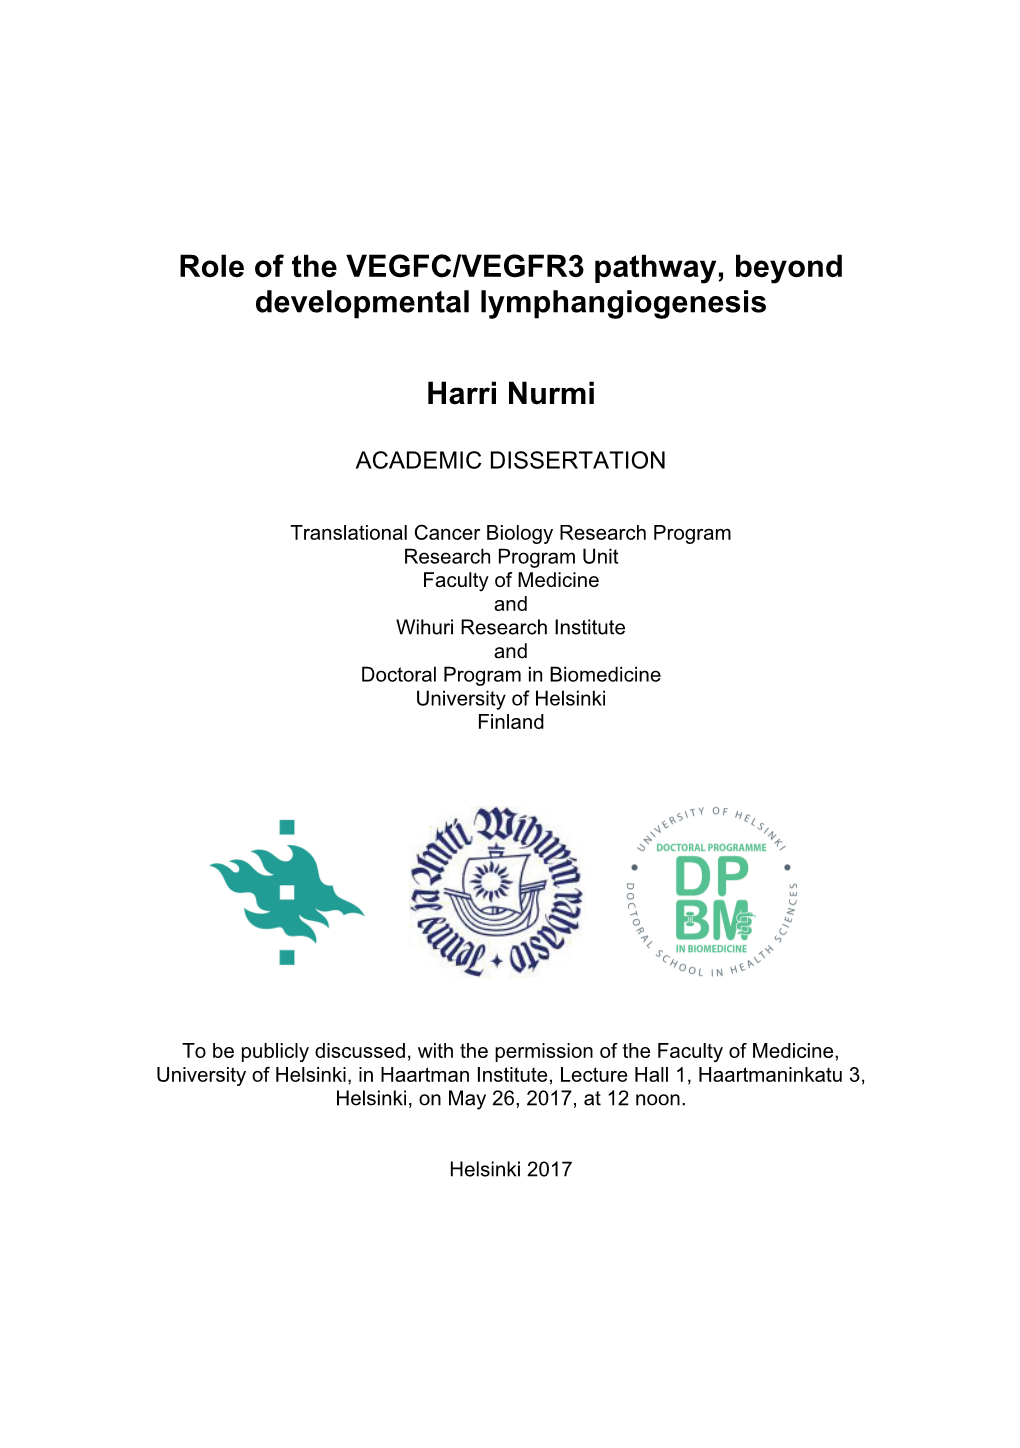 Role of the VEGFC/VEGFR3 Pathway, Beyond Developmental Lymphangiogenesis